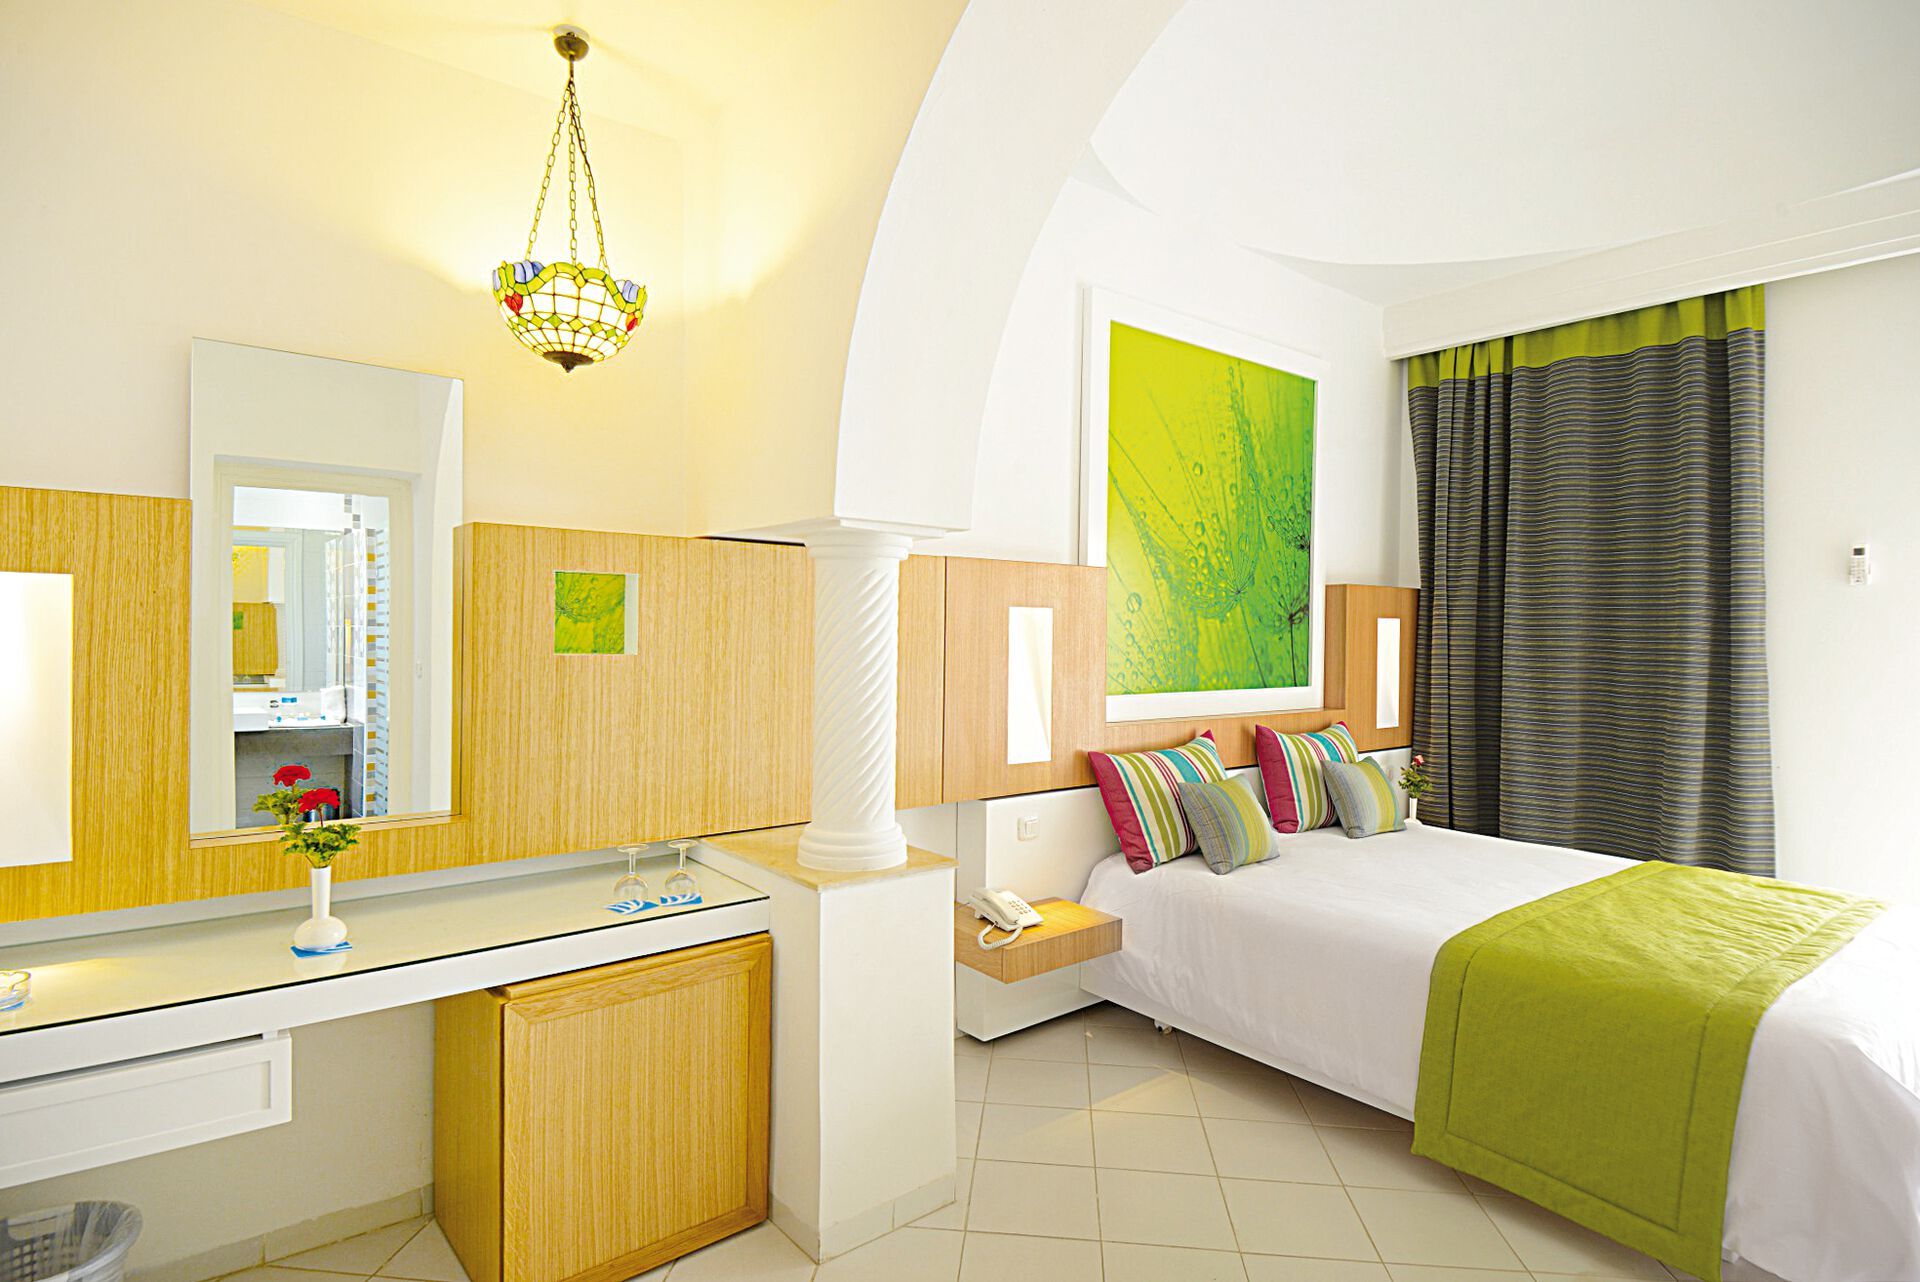 Tunisie - Monastir - Hôtel One Resort Aqua Park & Spa 4*